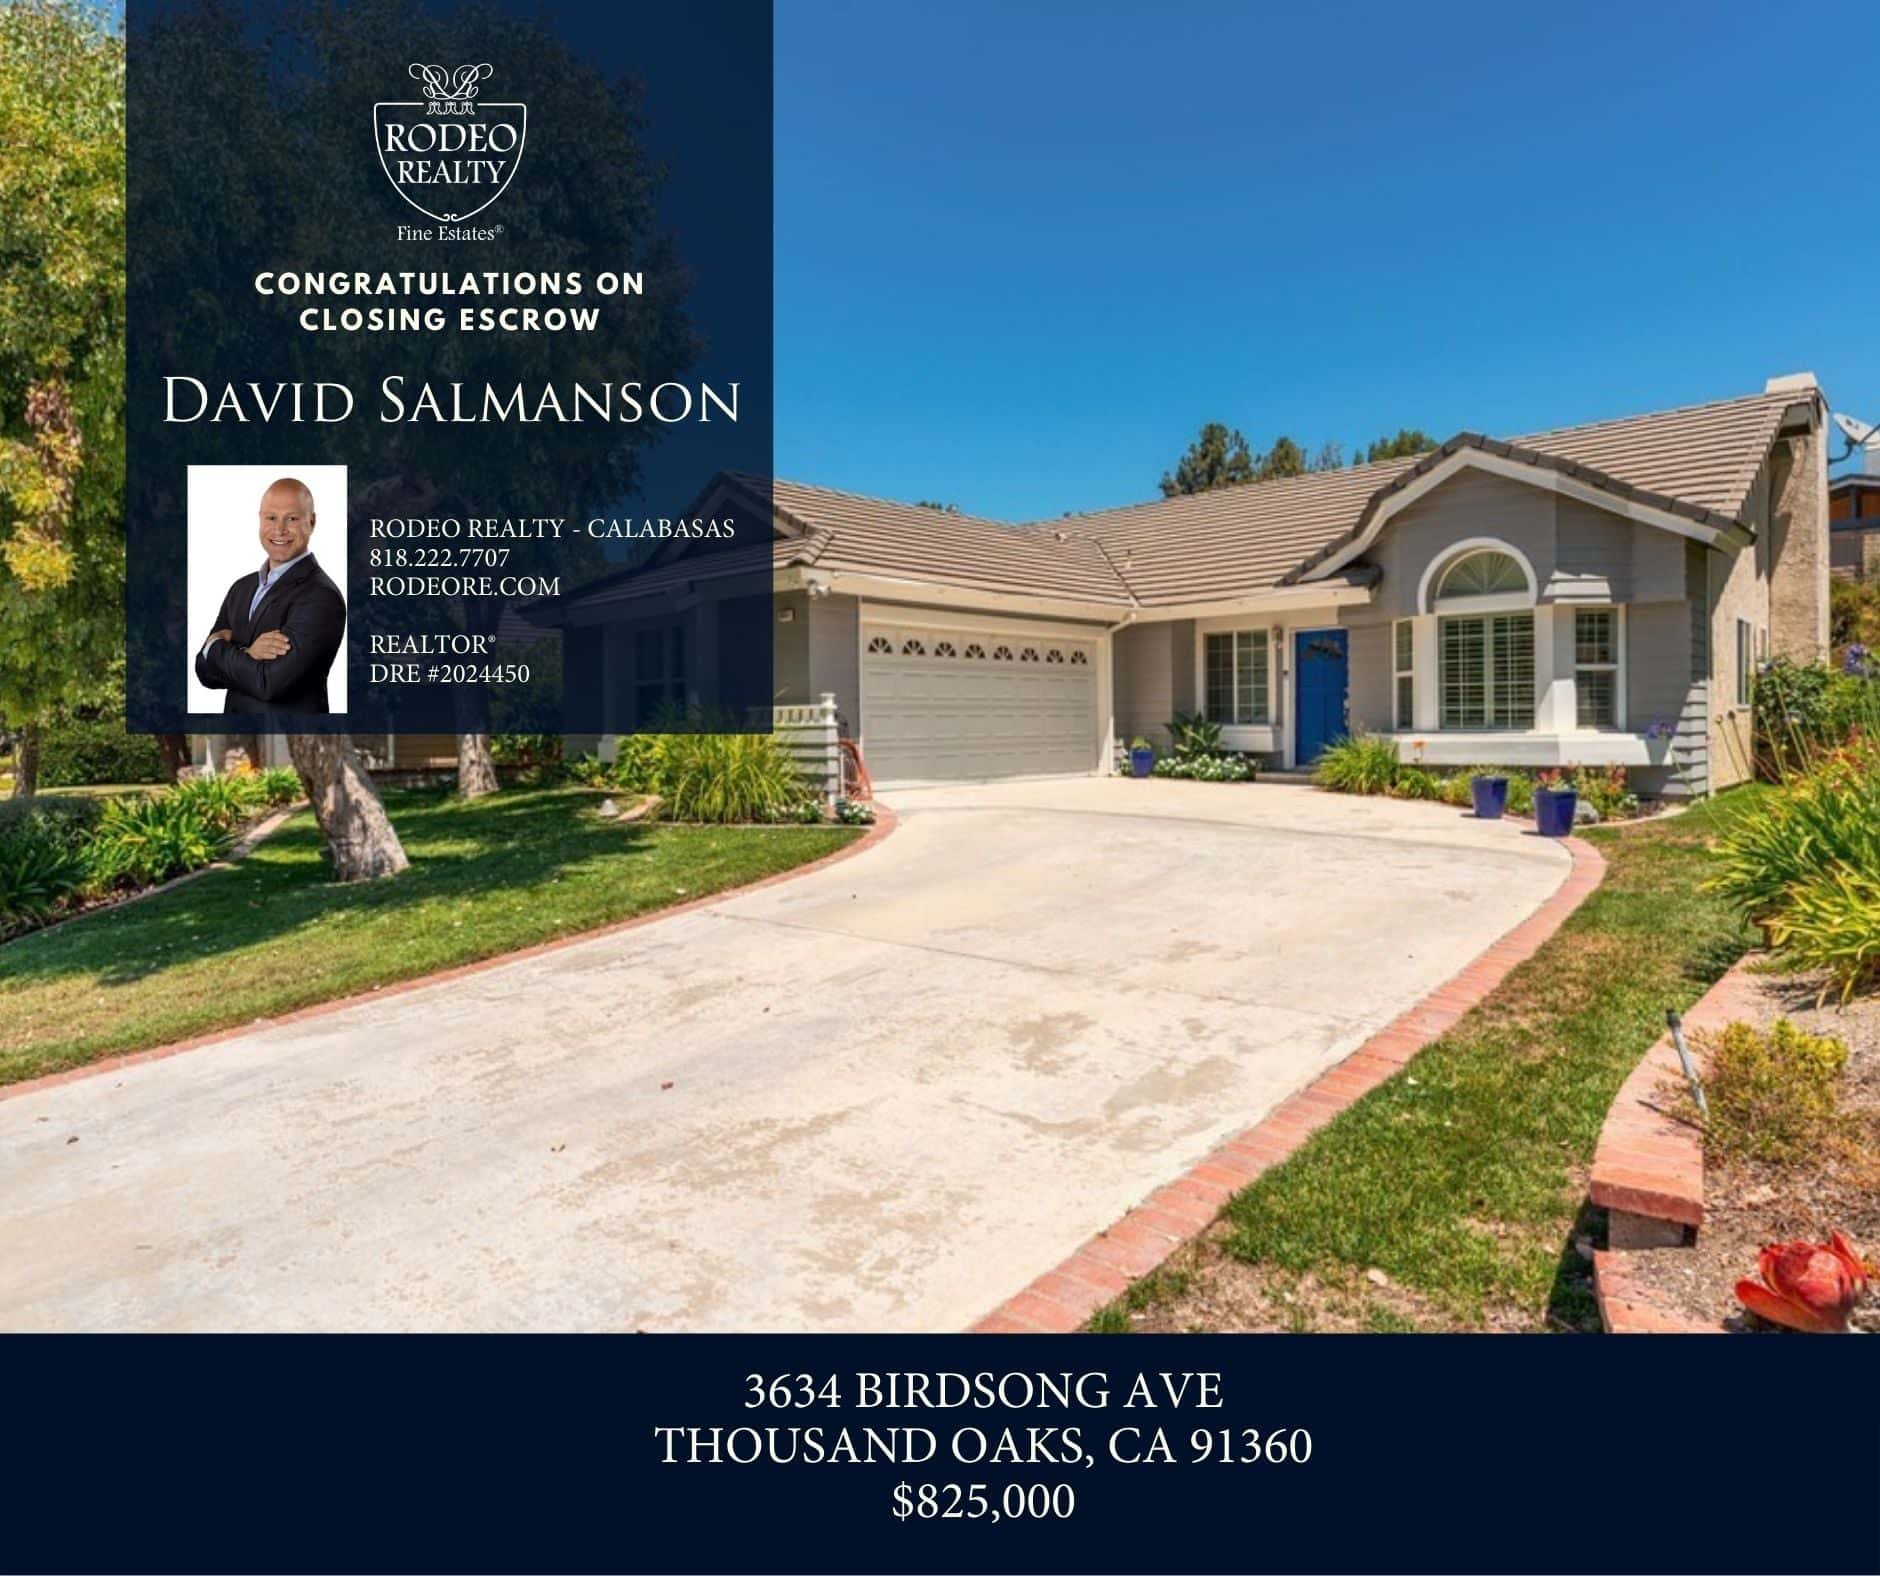 Thousand Oaks home sold